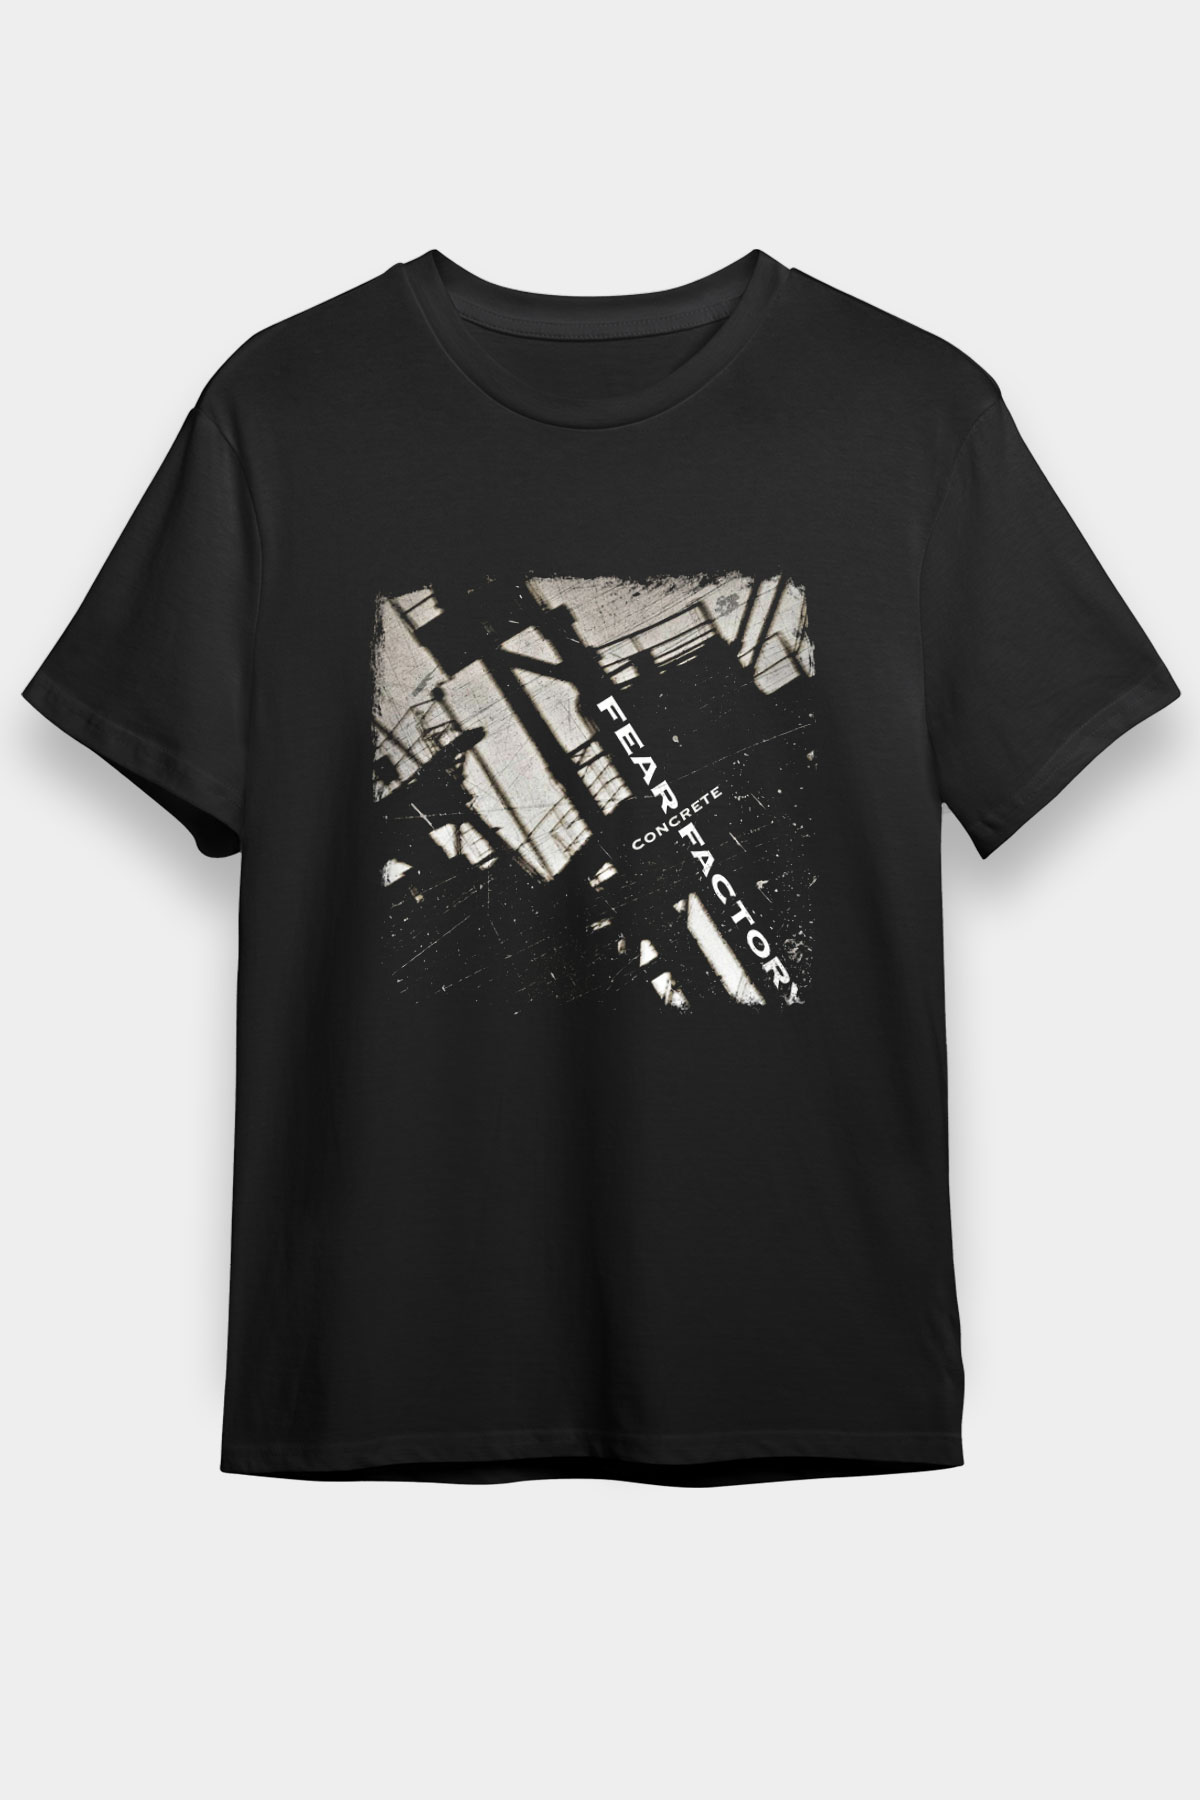 Fear Factory T shirt, Music Band  Tshirt  12/